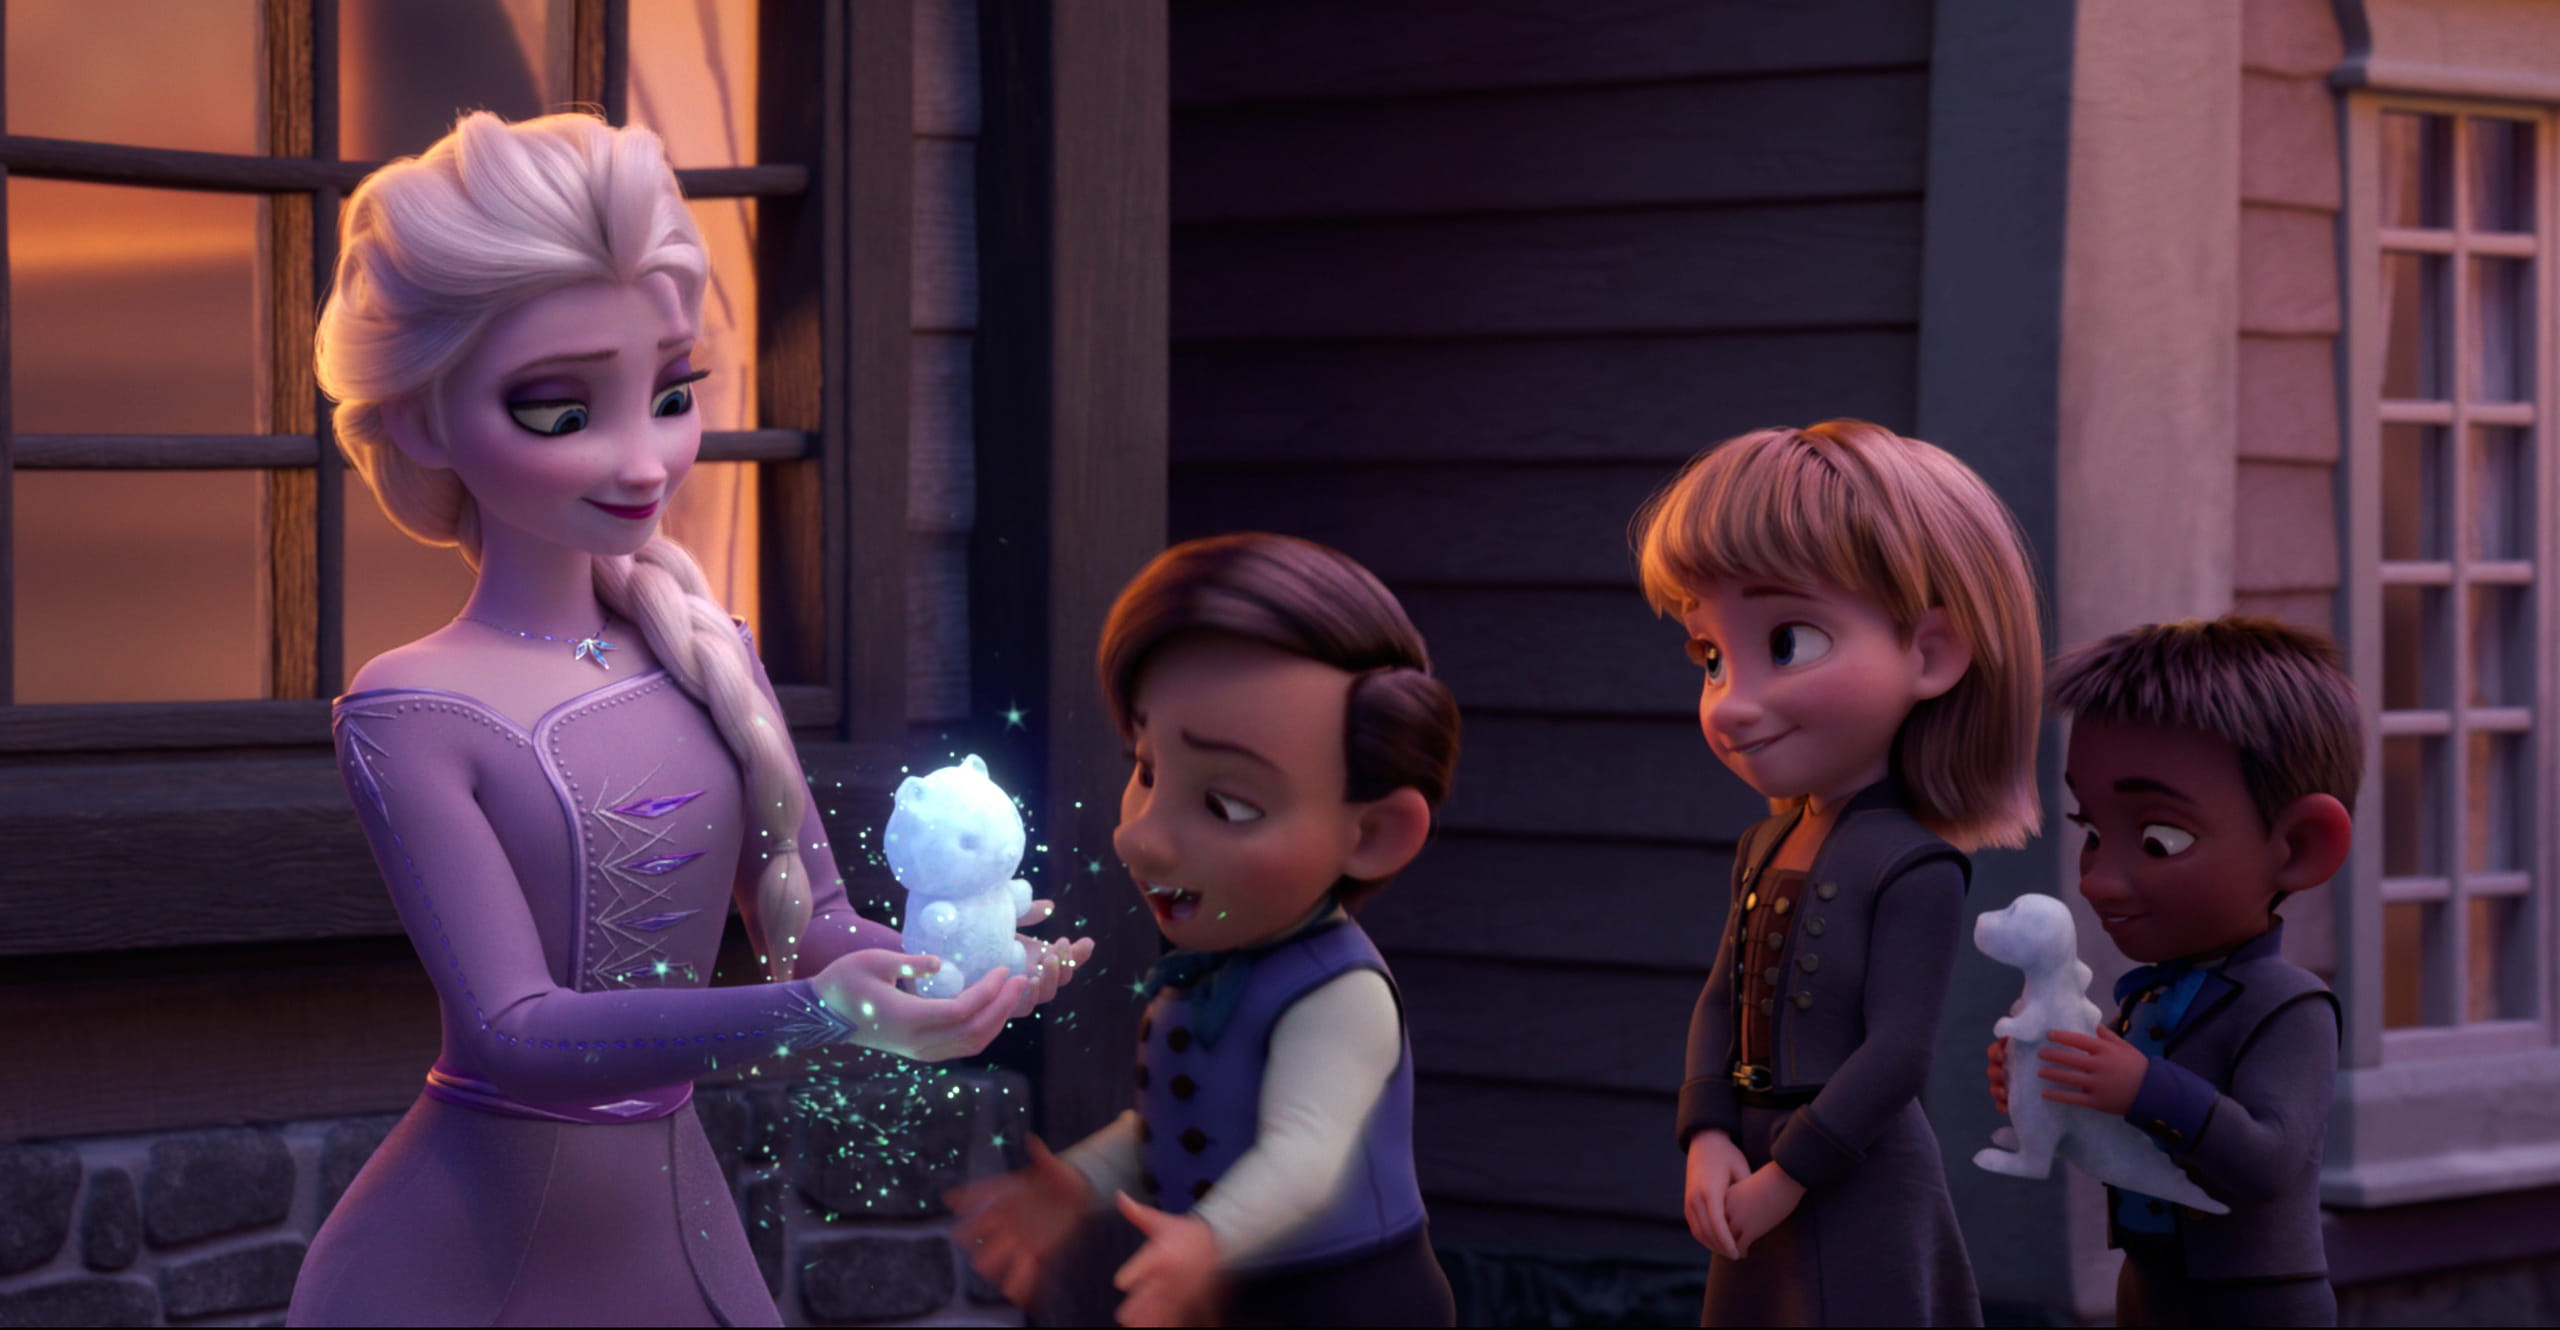 Elsa creating bear figurine with her magic